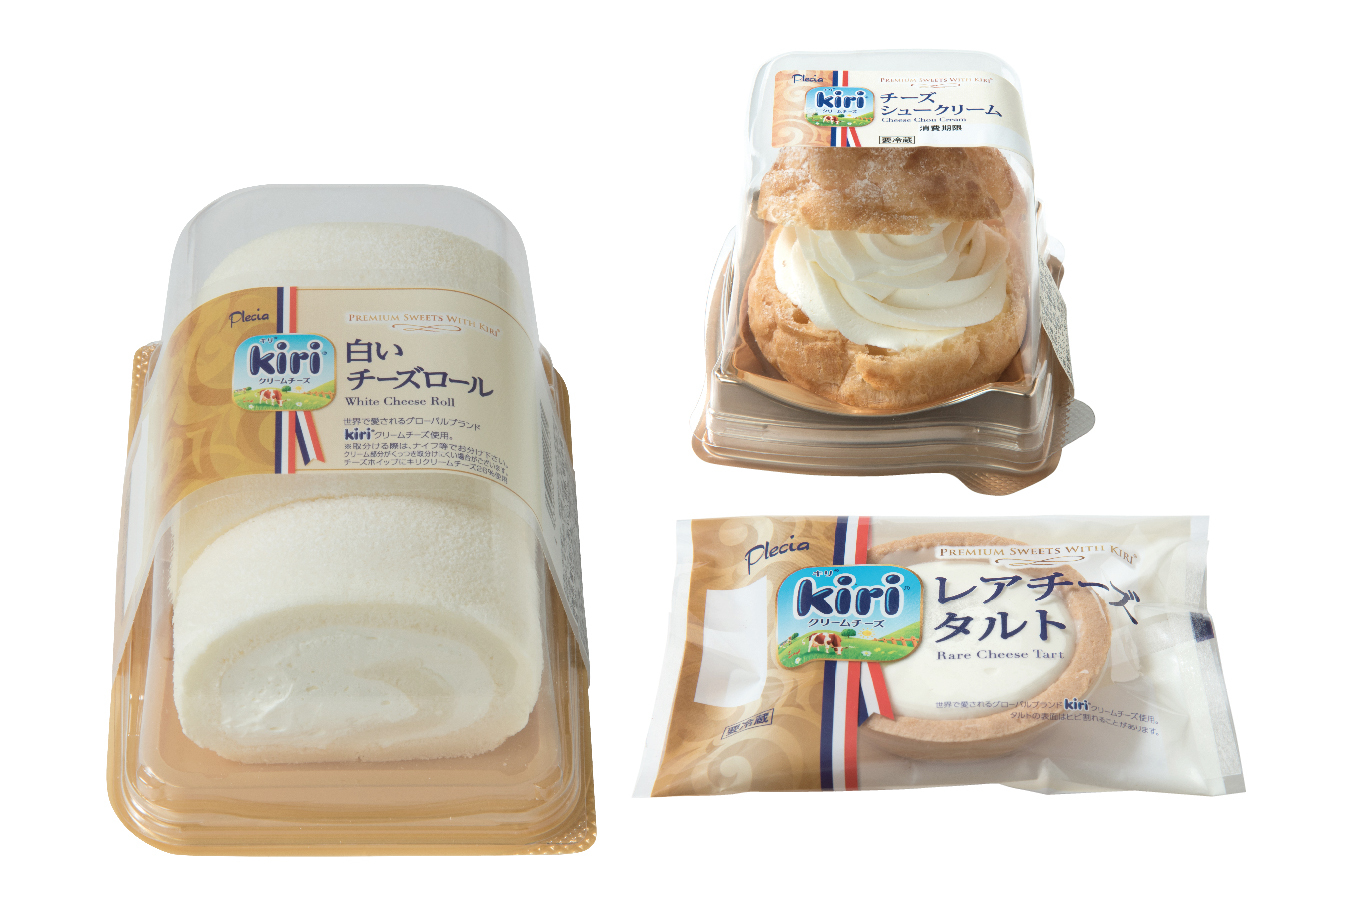 Kiri R のクリーミーで濃厚な味を楽しめるご褒美スイーツシリーズ Premium Sweets With Kiri R 誕生 ベル ジャポン株式会社のプレスリリース